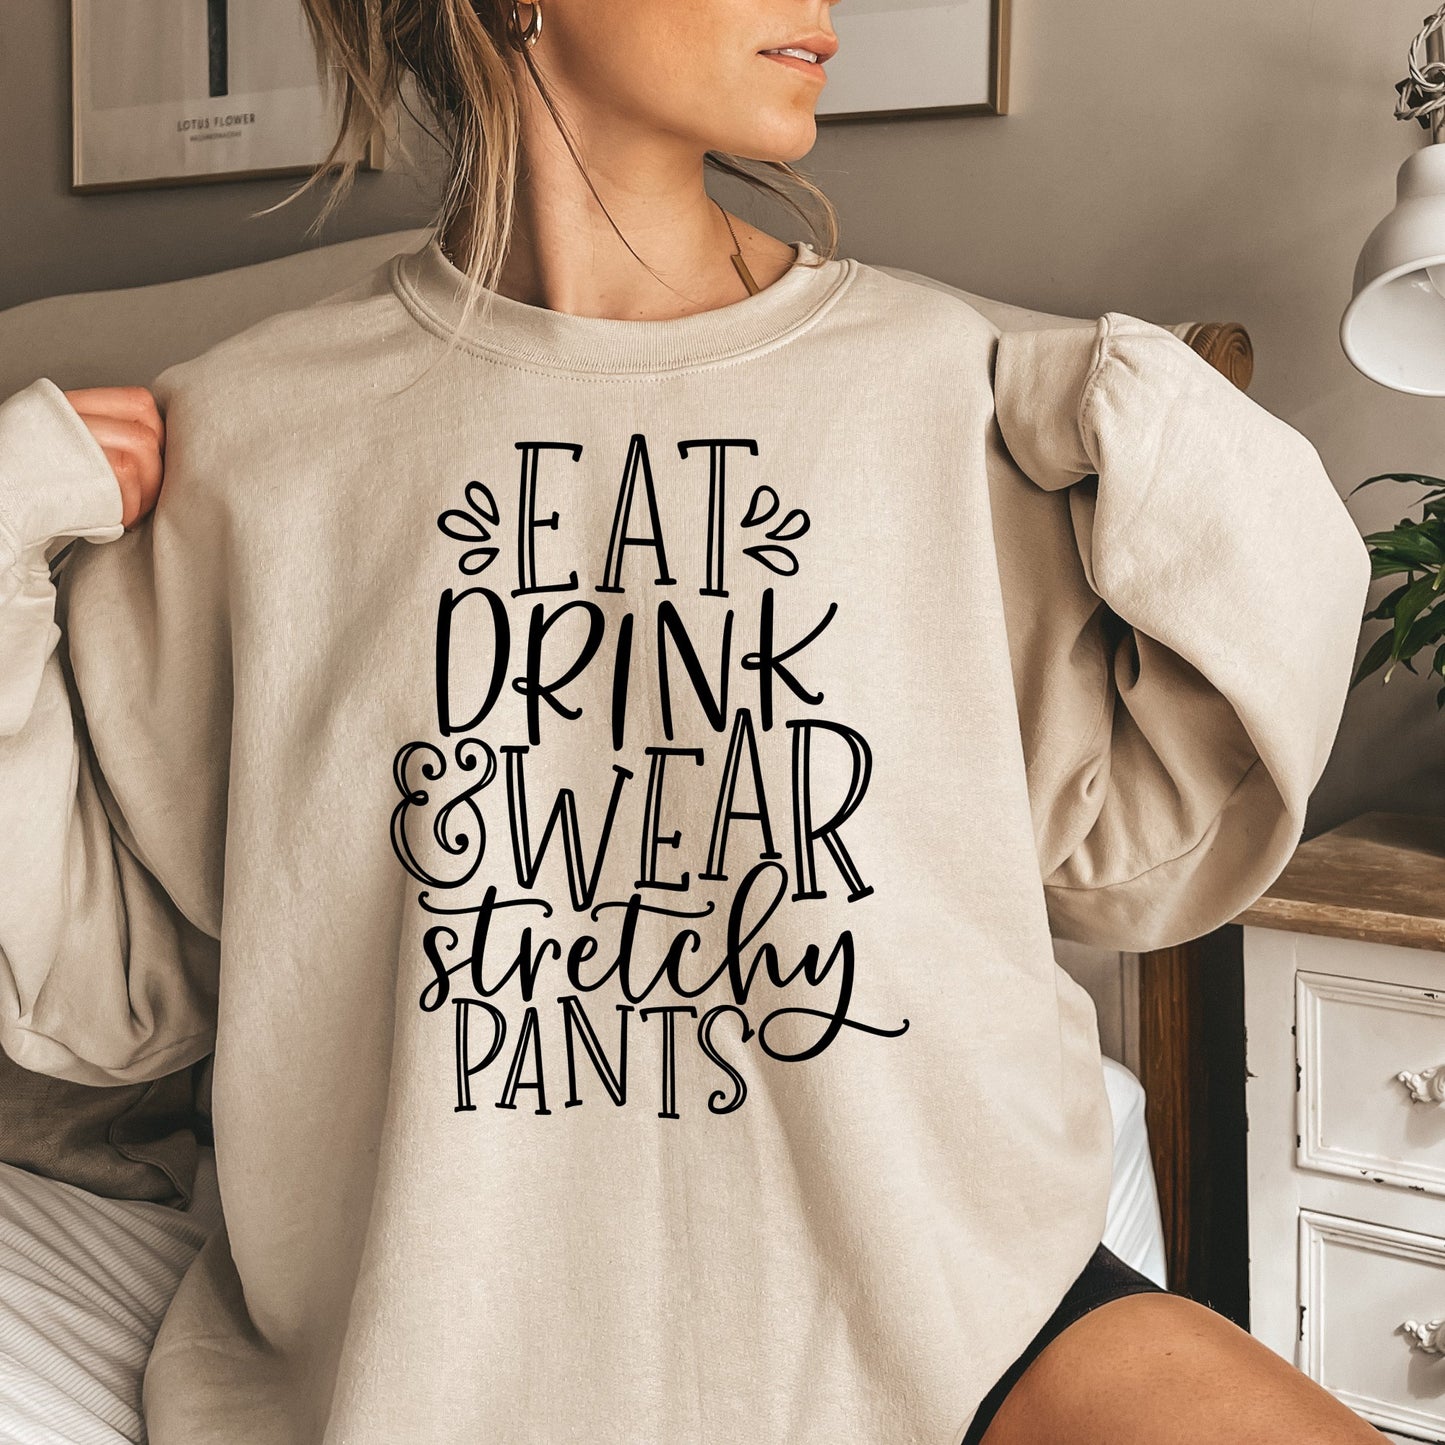 Eat Drink & Wear Stretchy Pants Thanksgiving Sweatshirt, Cute Thanksgiving Shirt, Fall Clothing, Thankful Family Shirts - Mardonyx Sweatshirt S / Sand